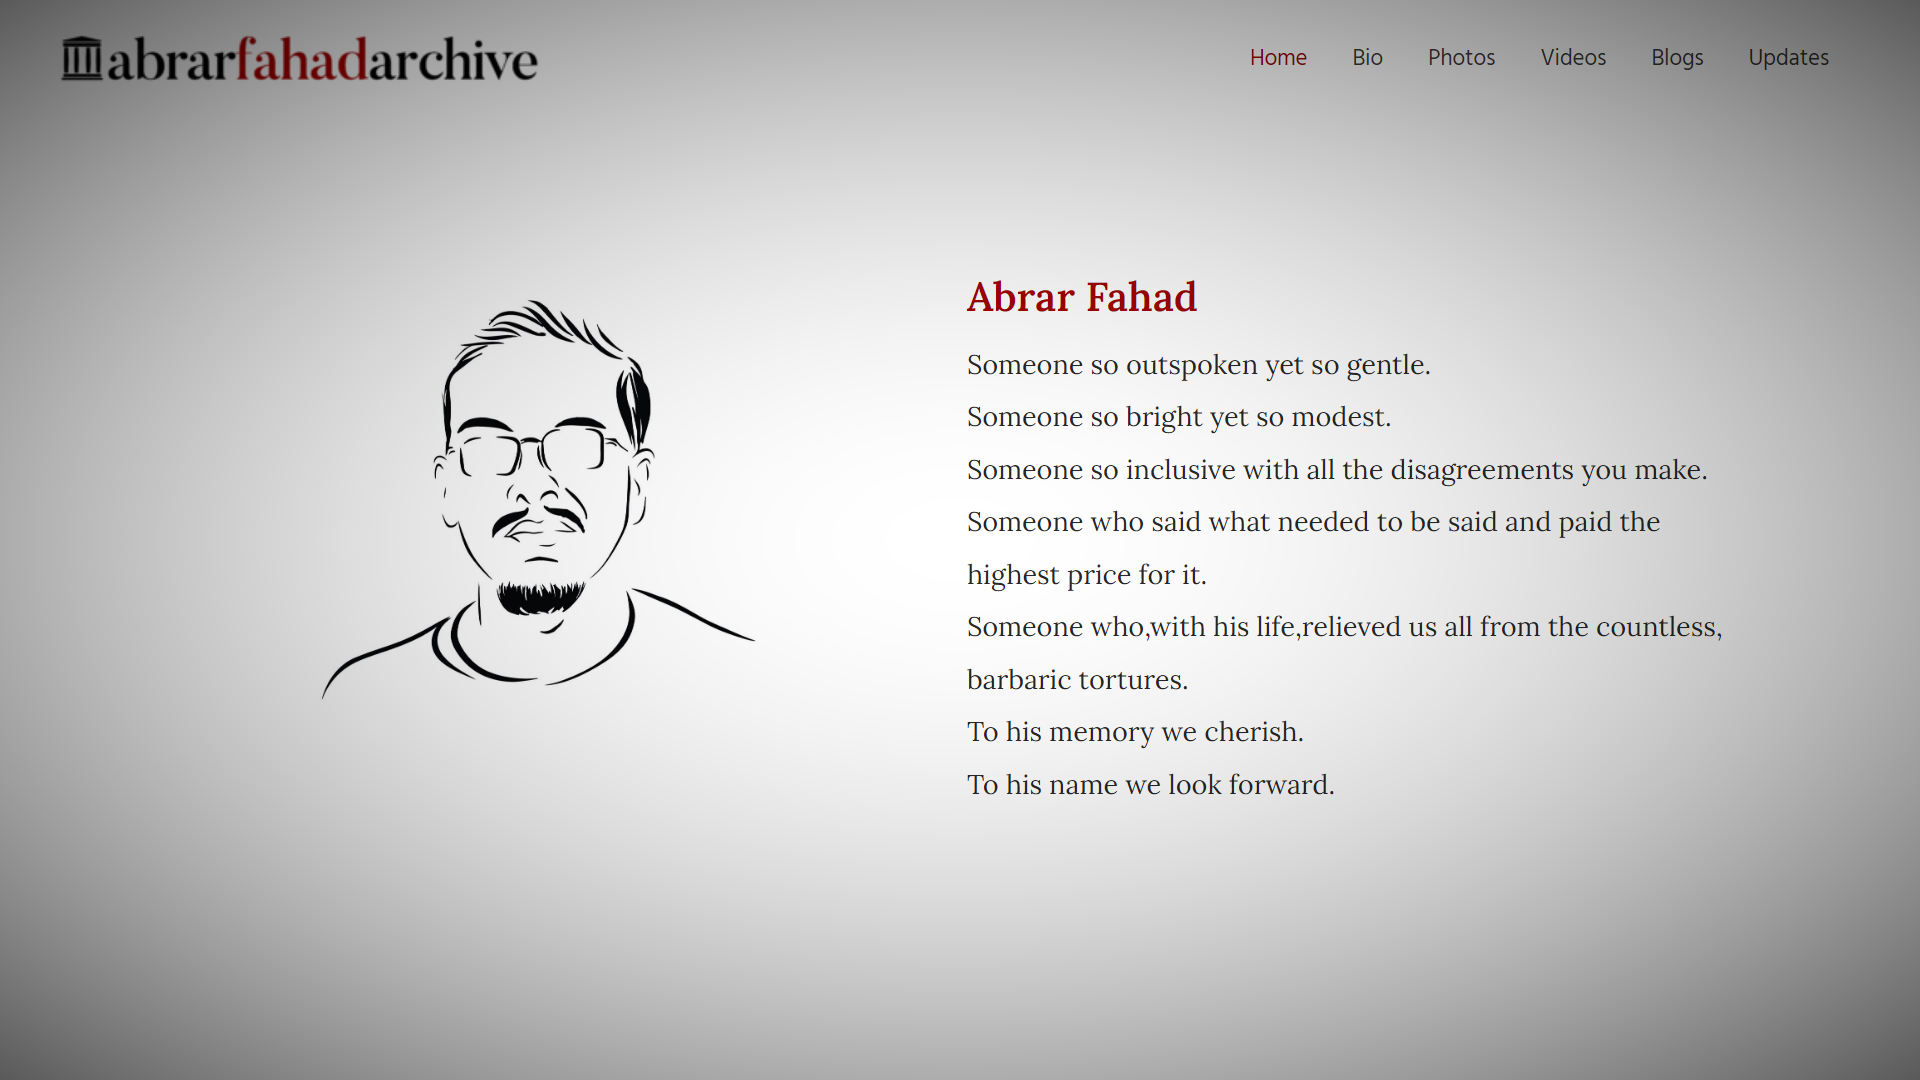 Abrar Fahad Archive